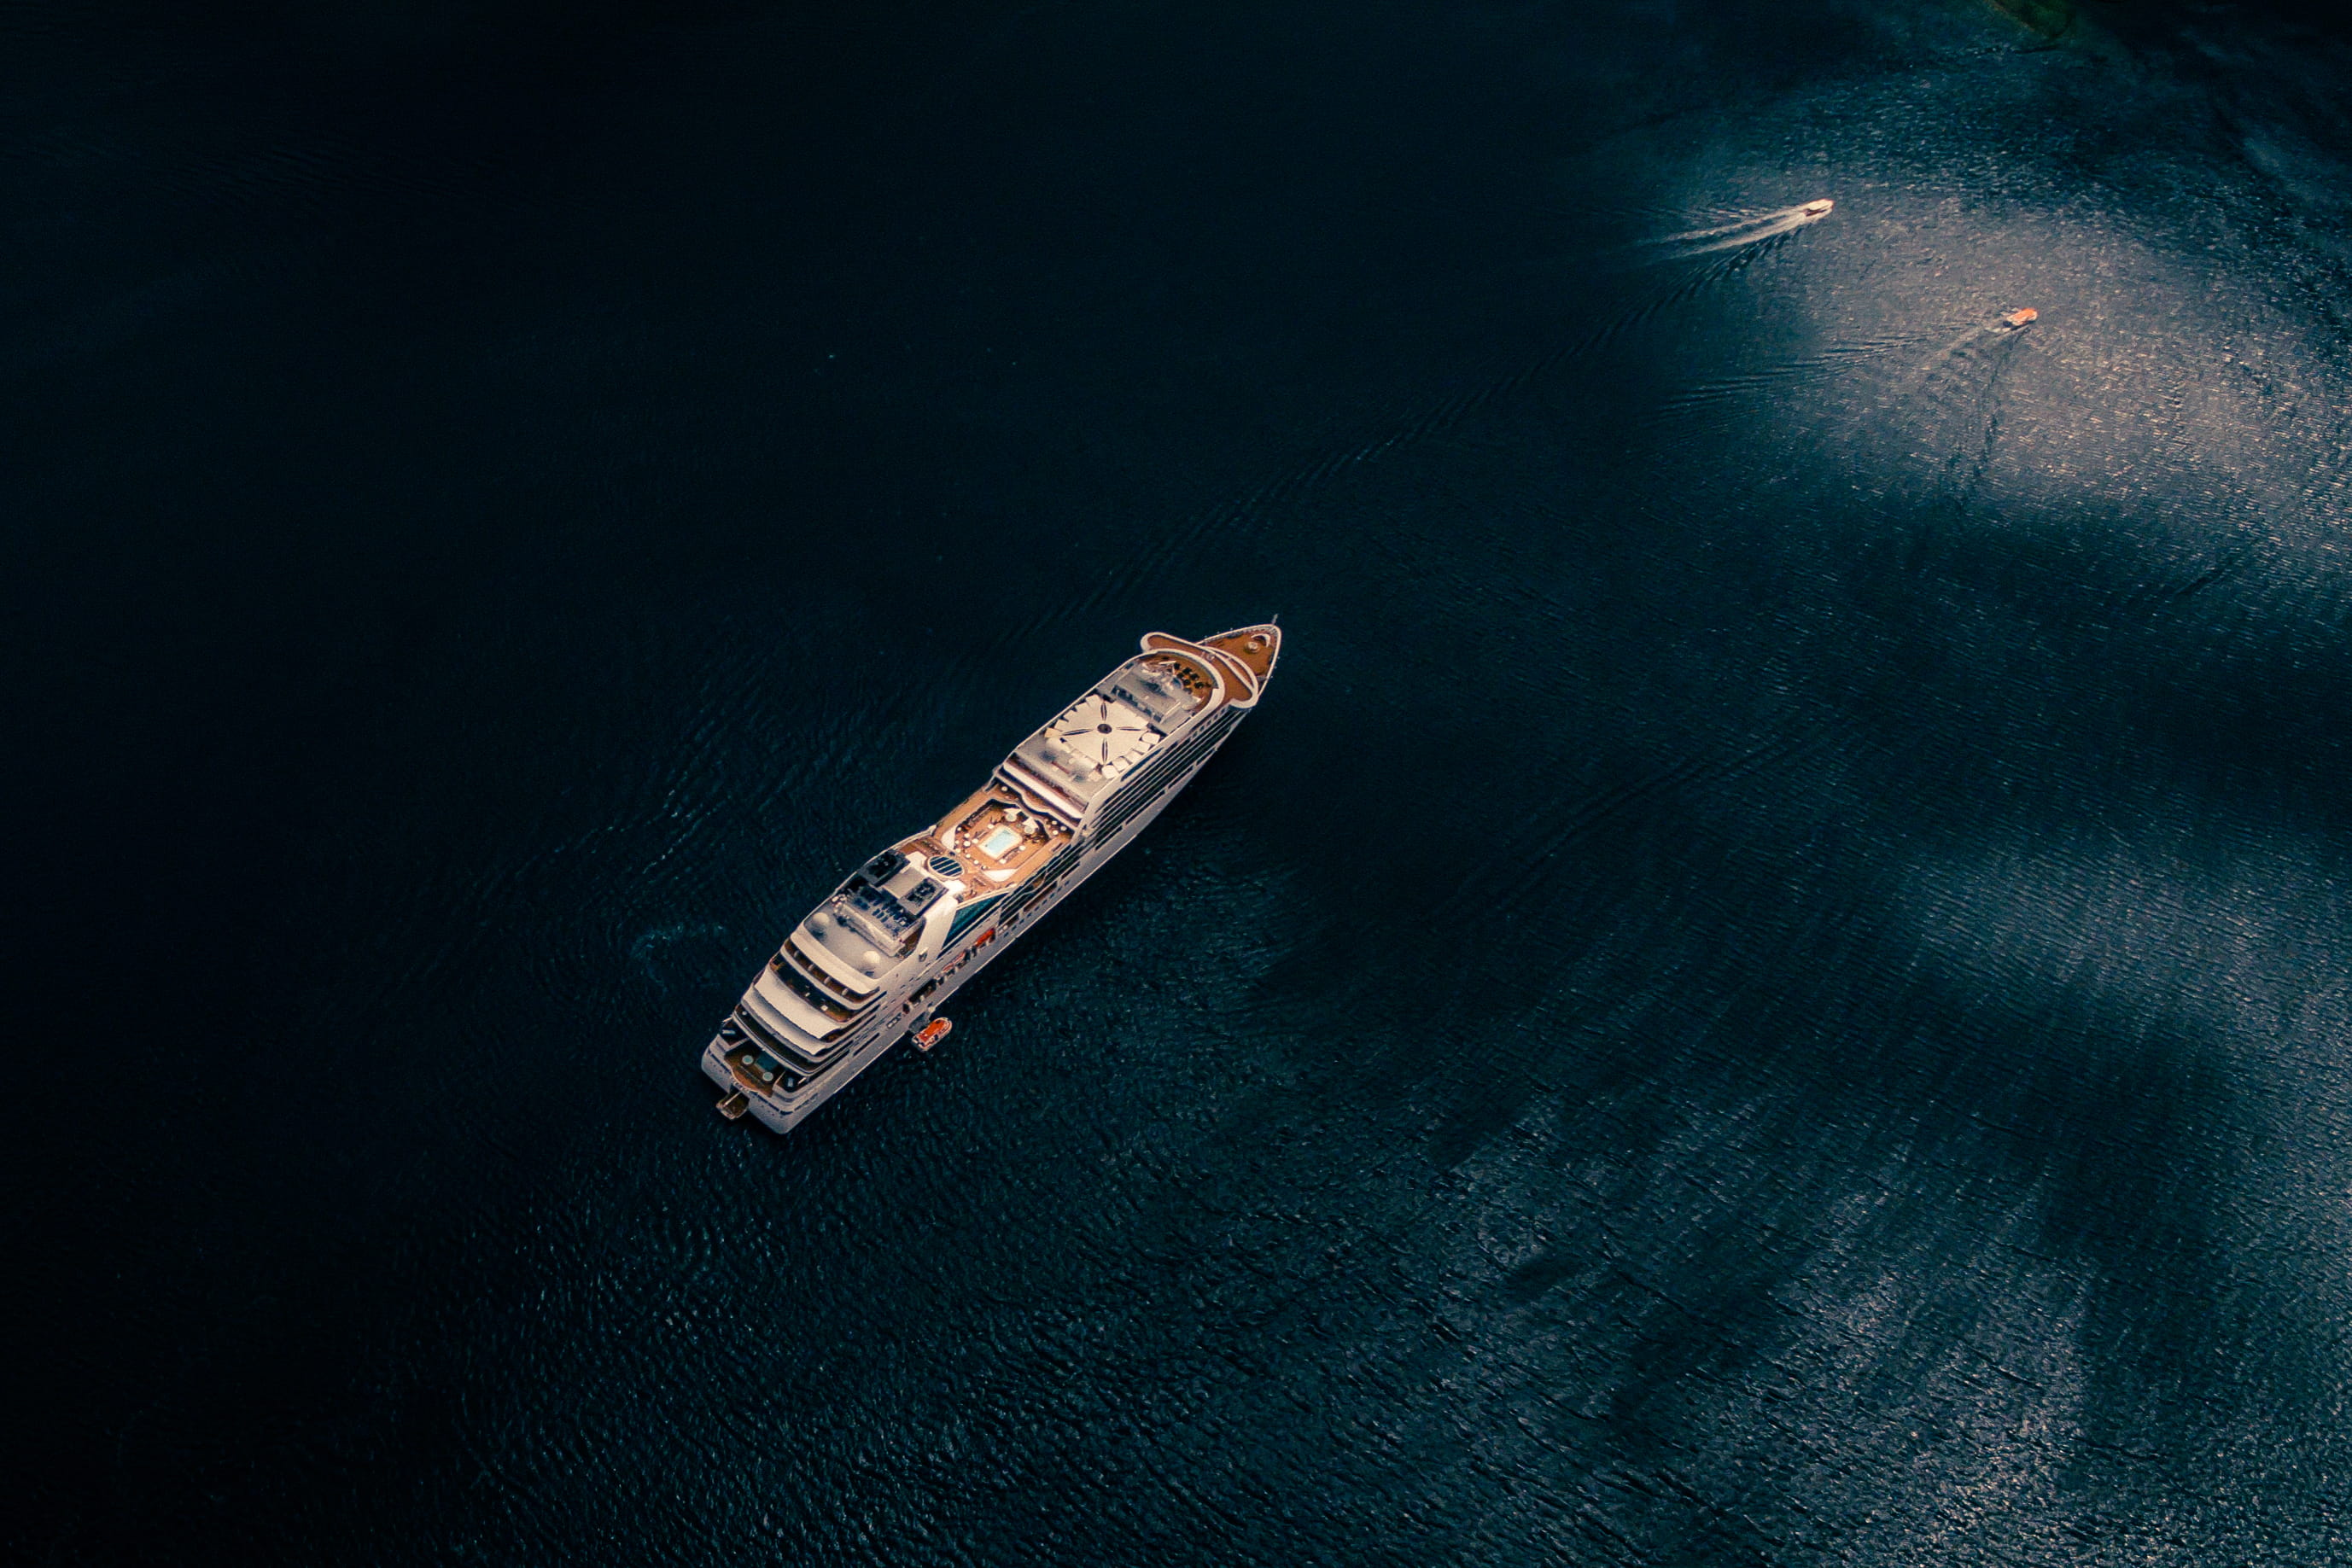 cruise ship on body of water, kotor, montenegro, aerial view